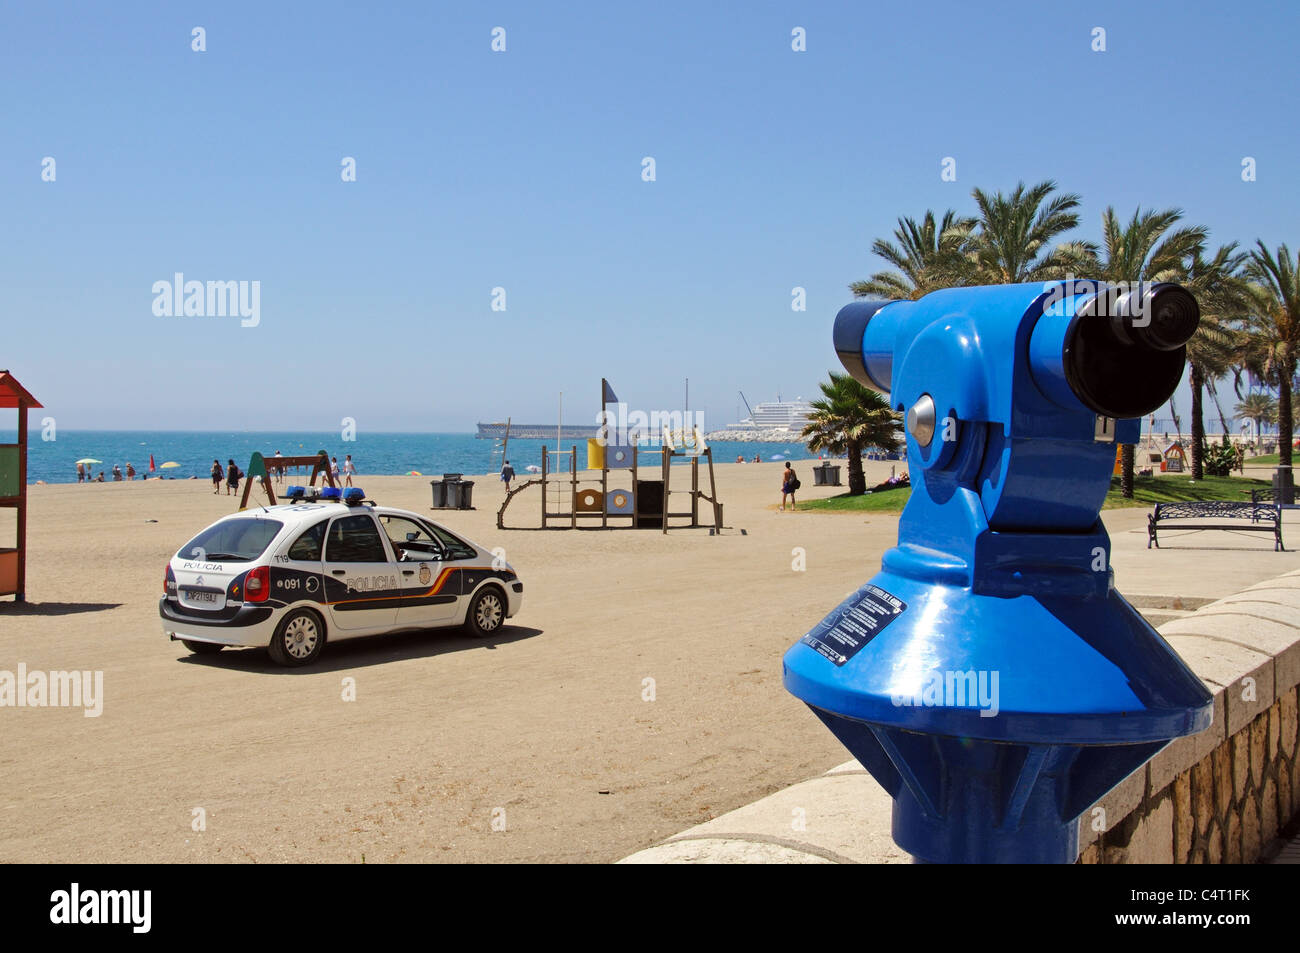 Telescope on the edge of Malagueta beach looking towards a police car, the port and Mediterranean sea, Malaga, Spain, Europe. Stock Photo